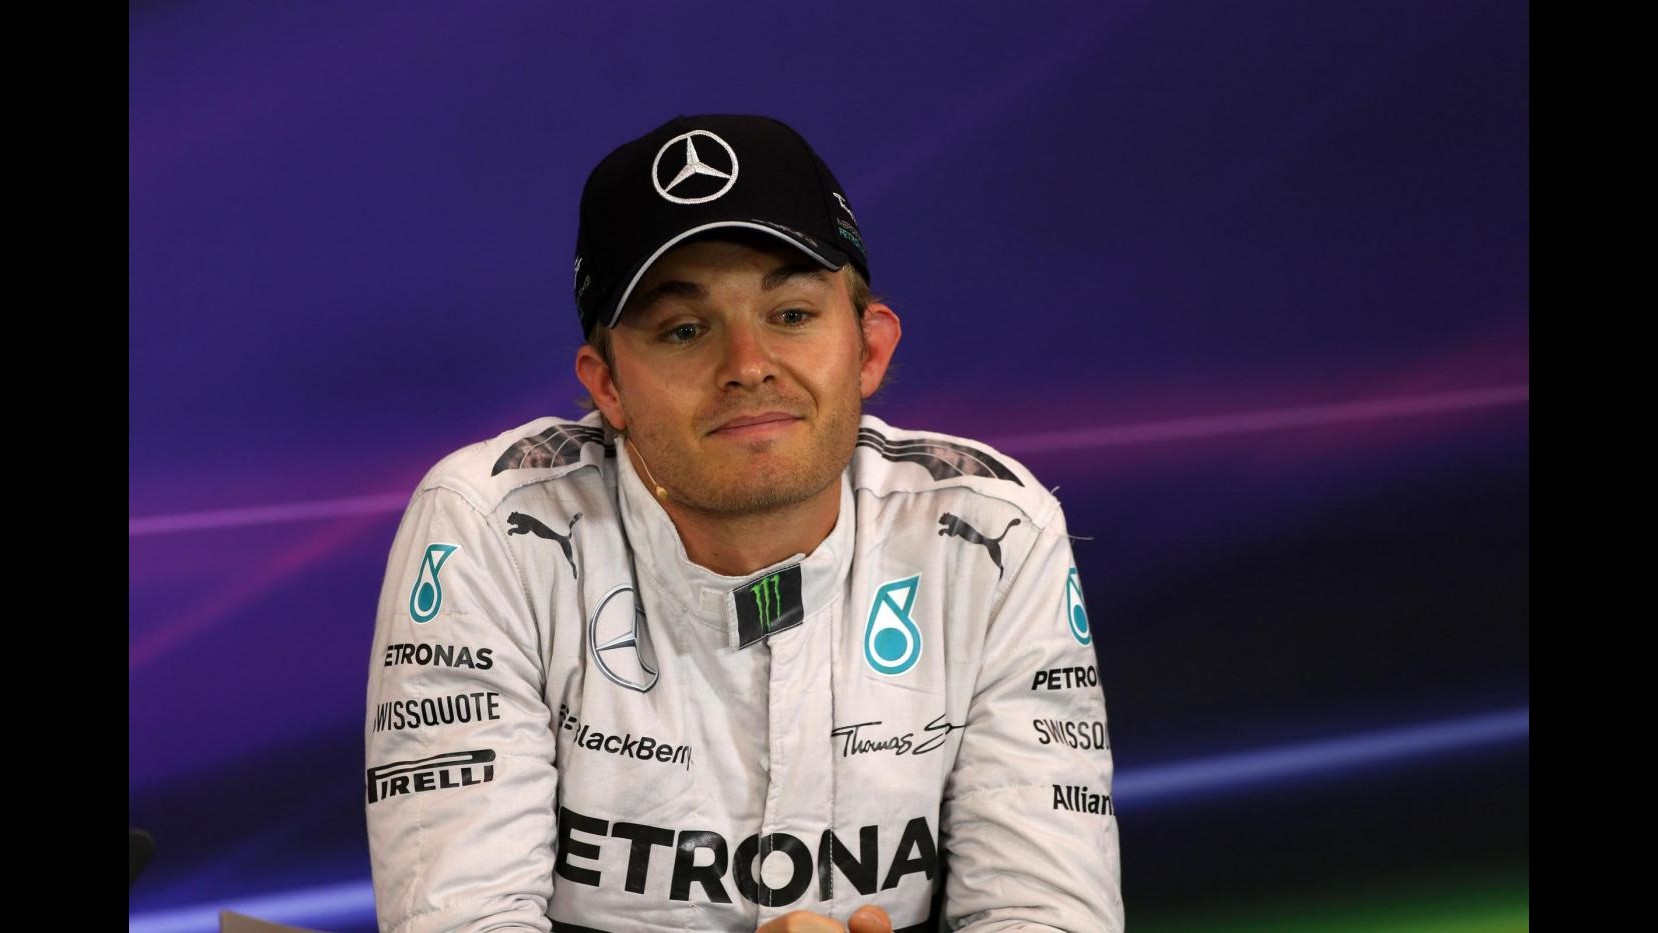 F1, Rosberg: Non è stata gara semplice, vittoria fantastica